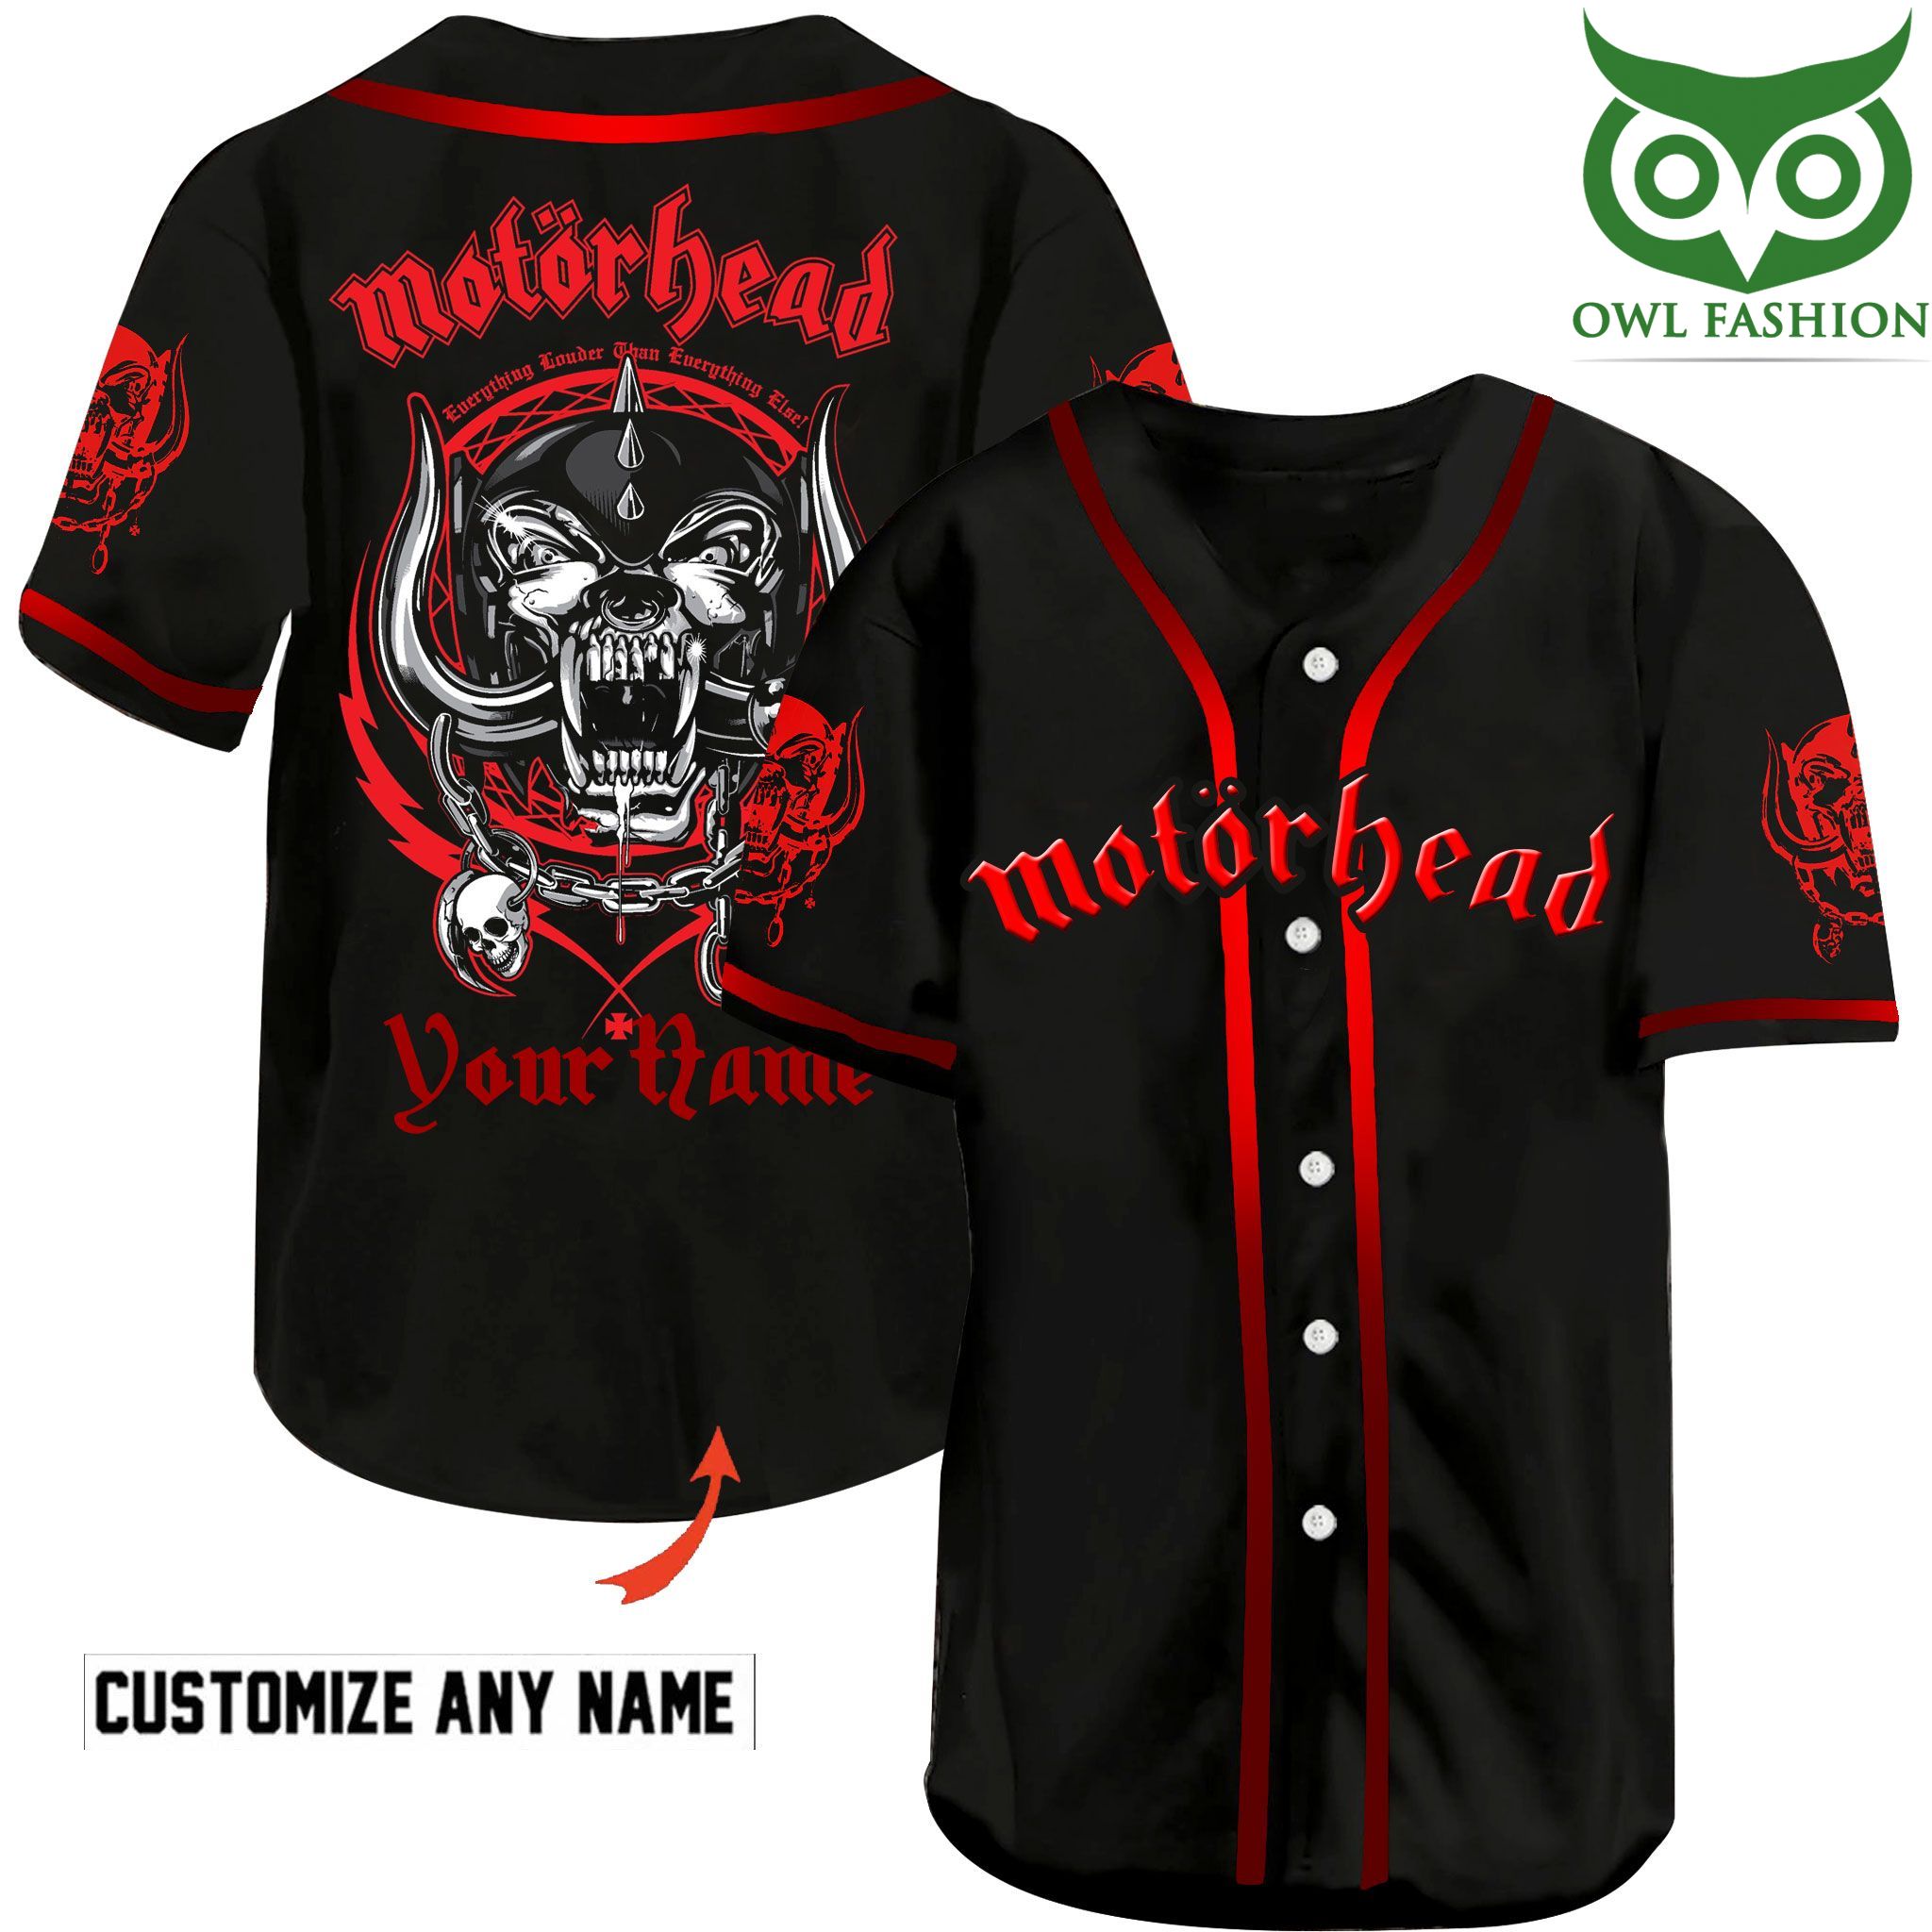 121 Motorhead Customize Name Baseball Jersey Shirt